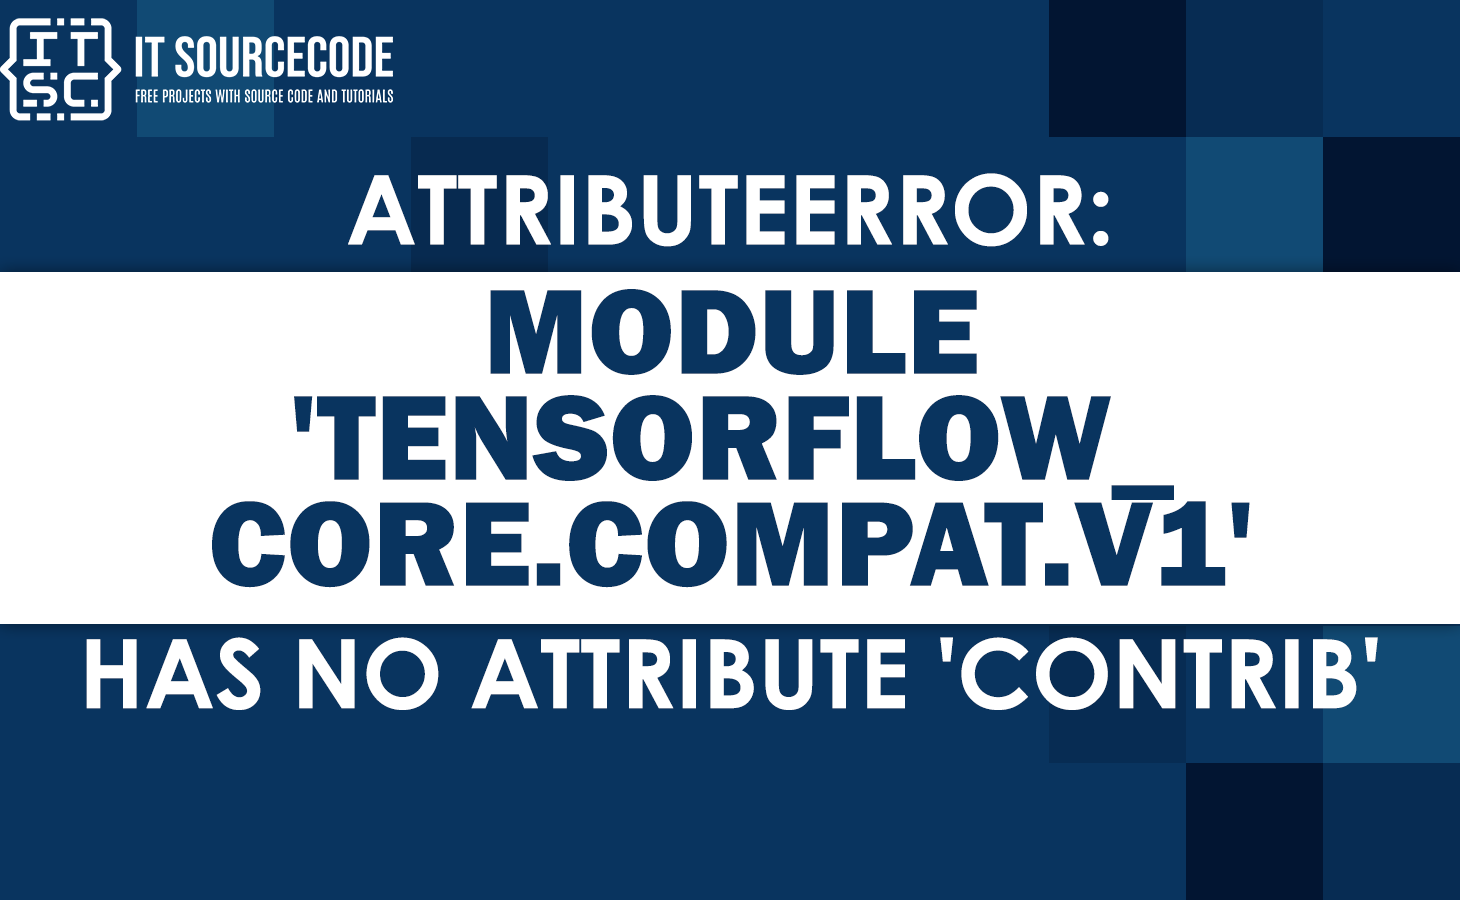 Attributeerror module tensorflow compat v1 has no attribute contrib